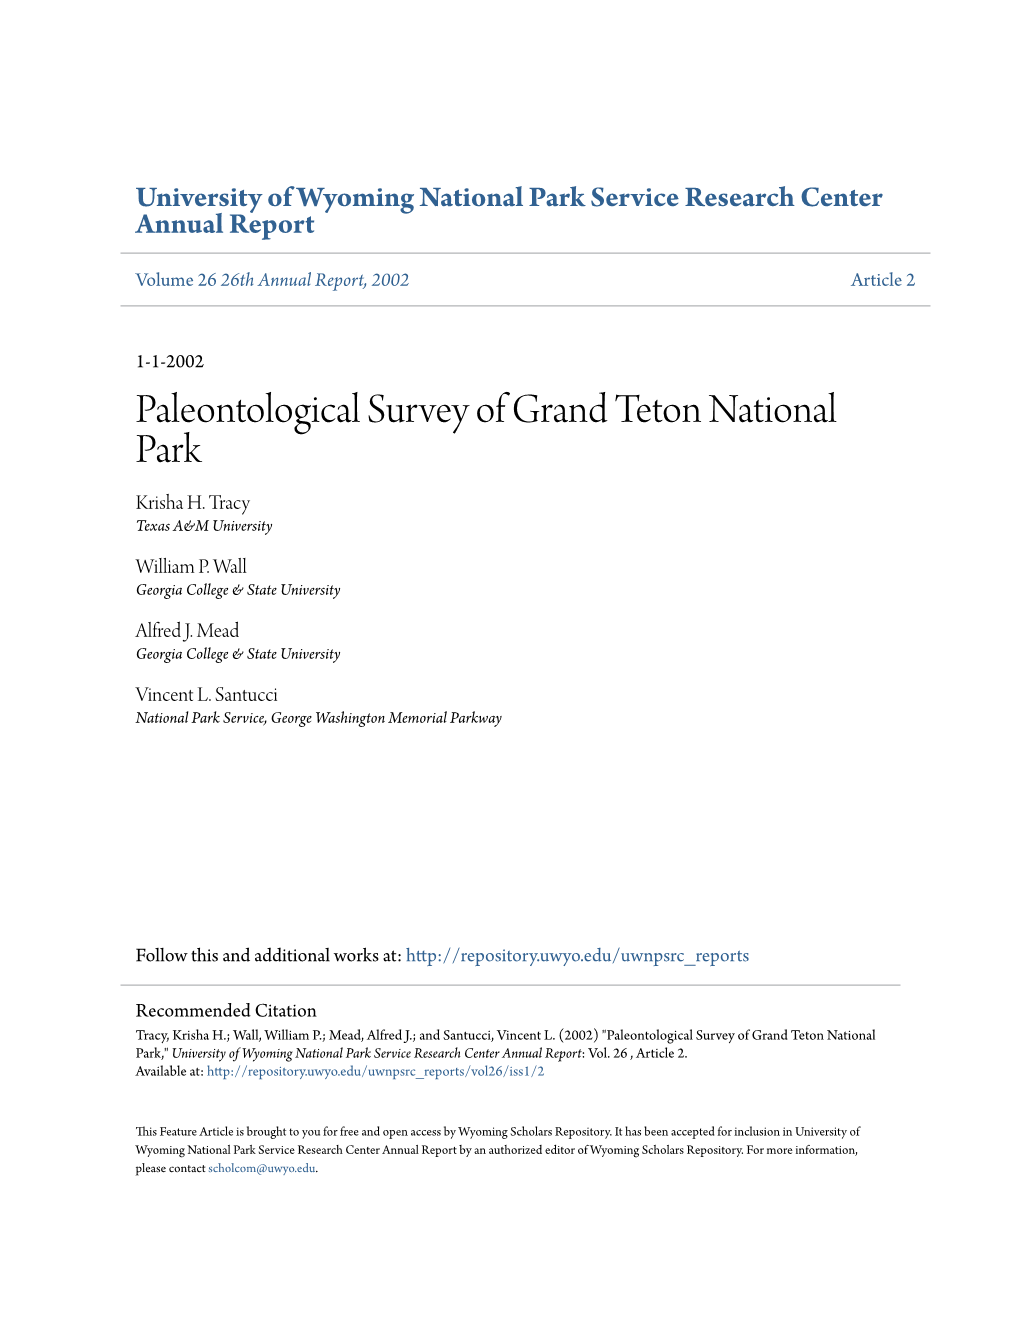 Paleontological Survey of Grand Teton National Park Krisha H